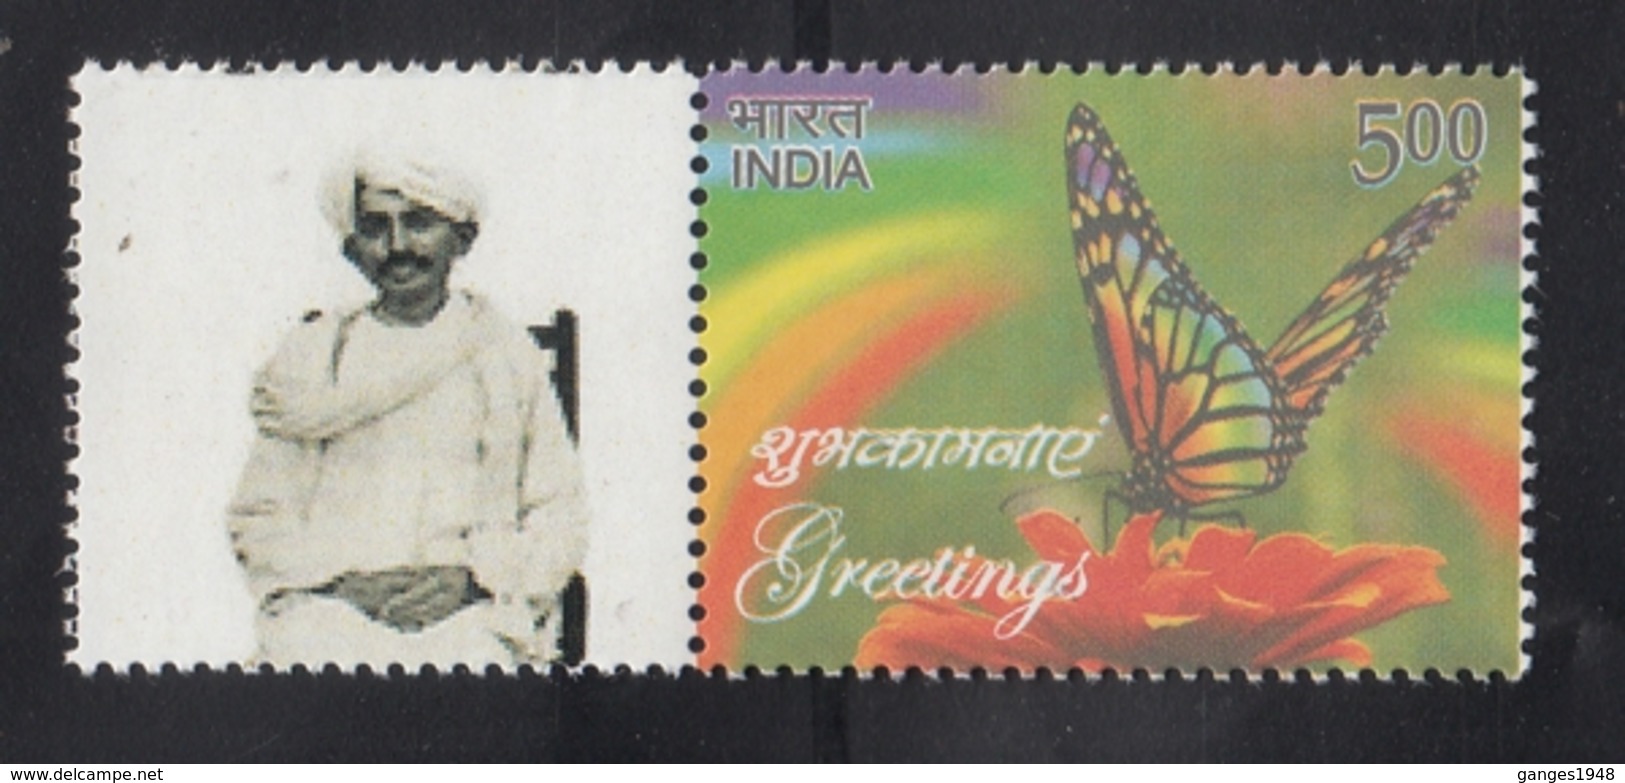 India  2016  Mahatma Gandhi  My Stamp  Butterfly  Ahmedabad Issue  # 16857  D  Inde Indien - Mahatma Gandhi